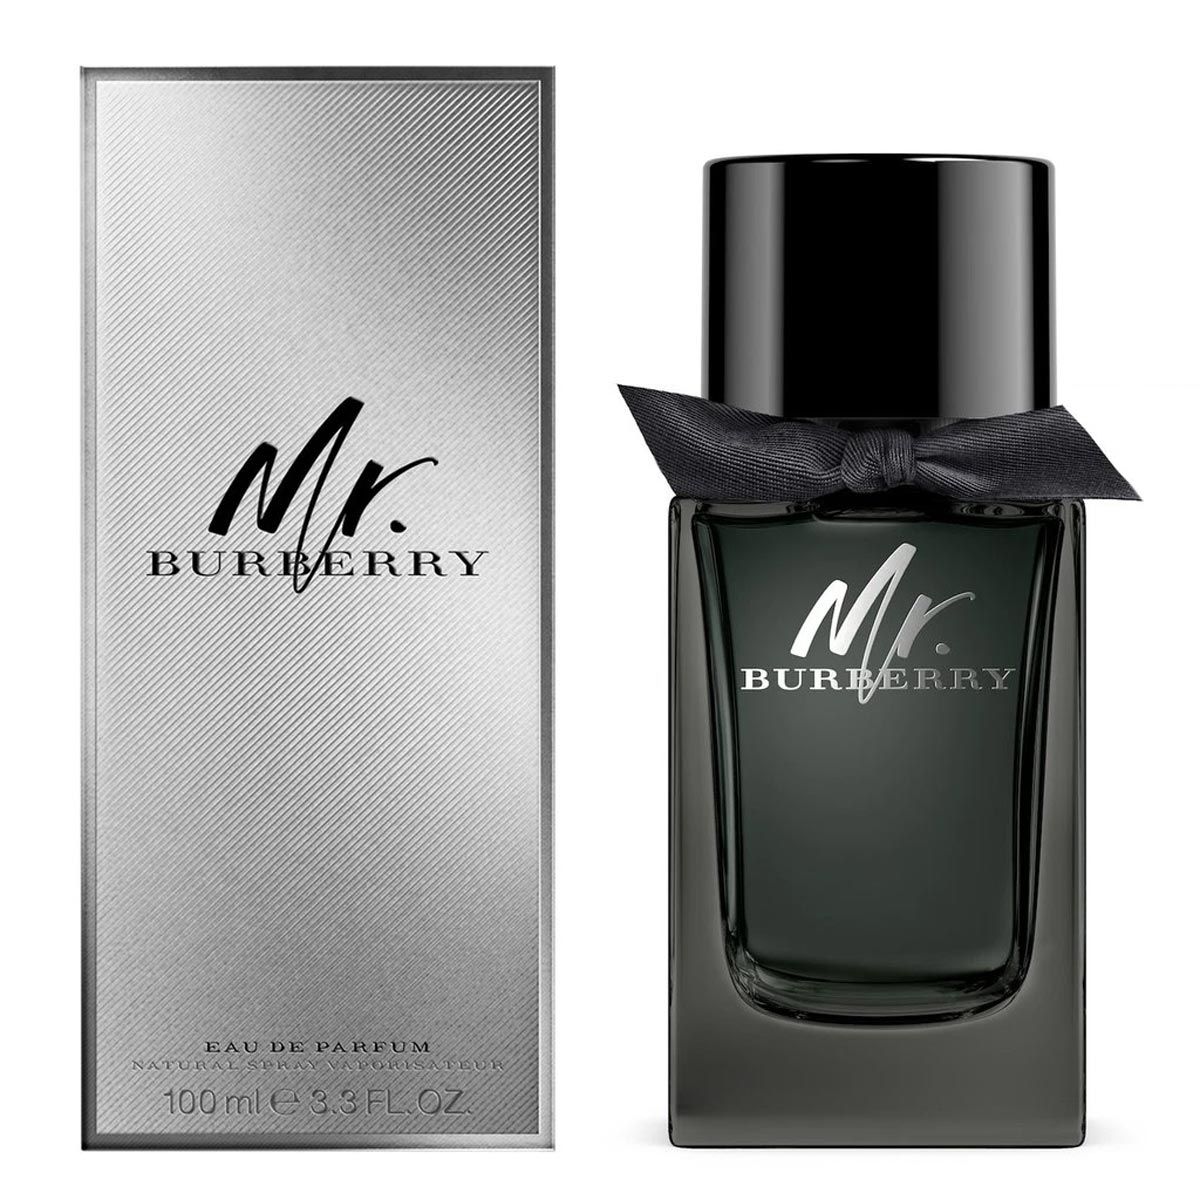  Mr. Burberry Eau de Parfum 